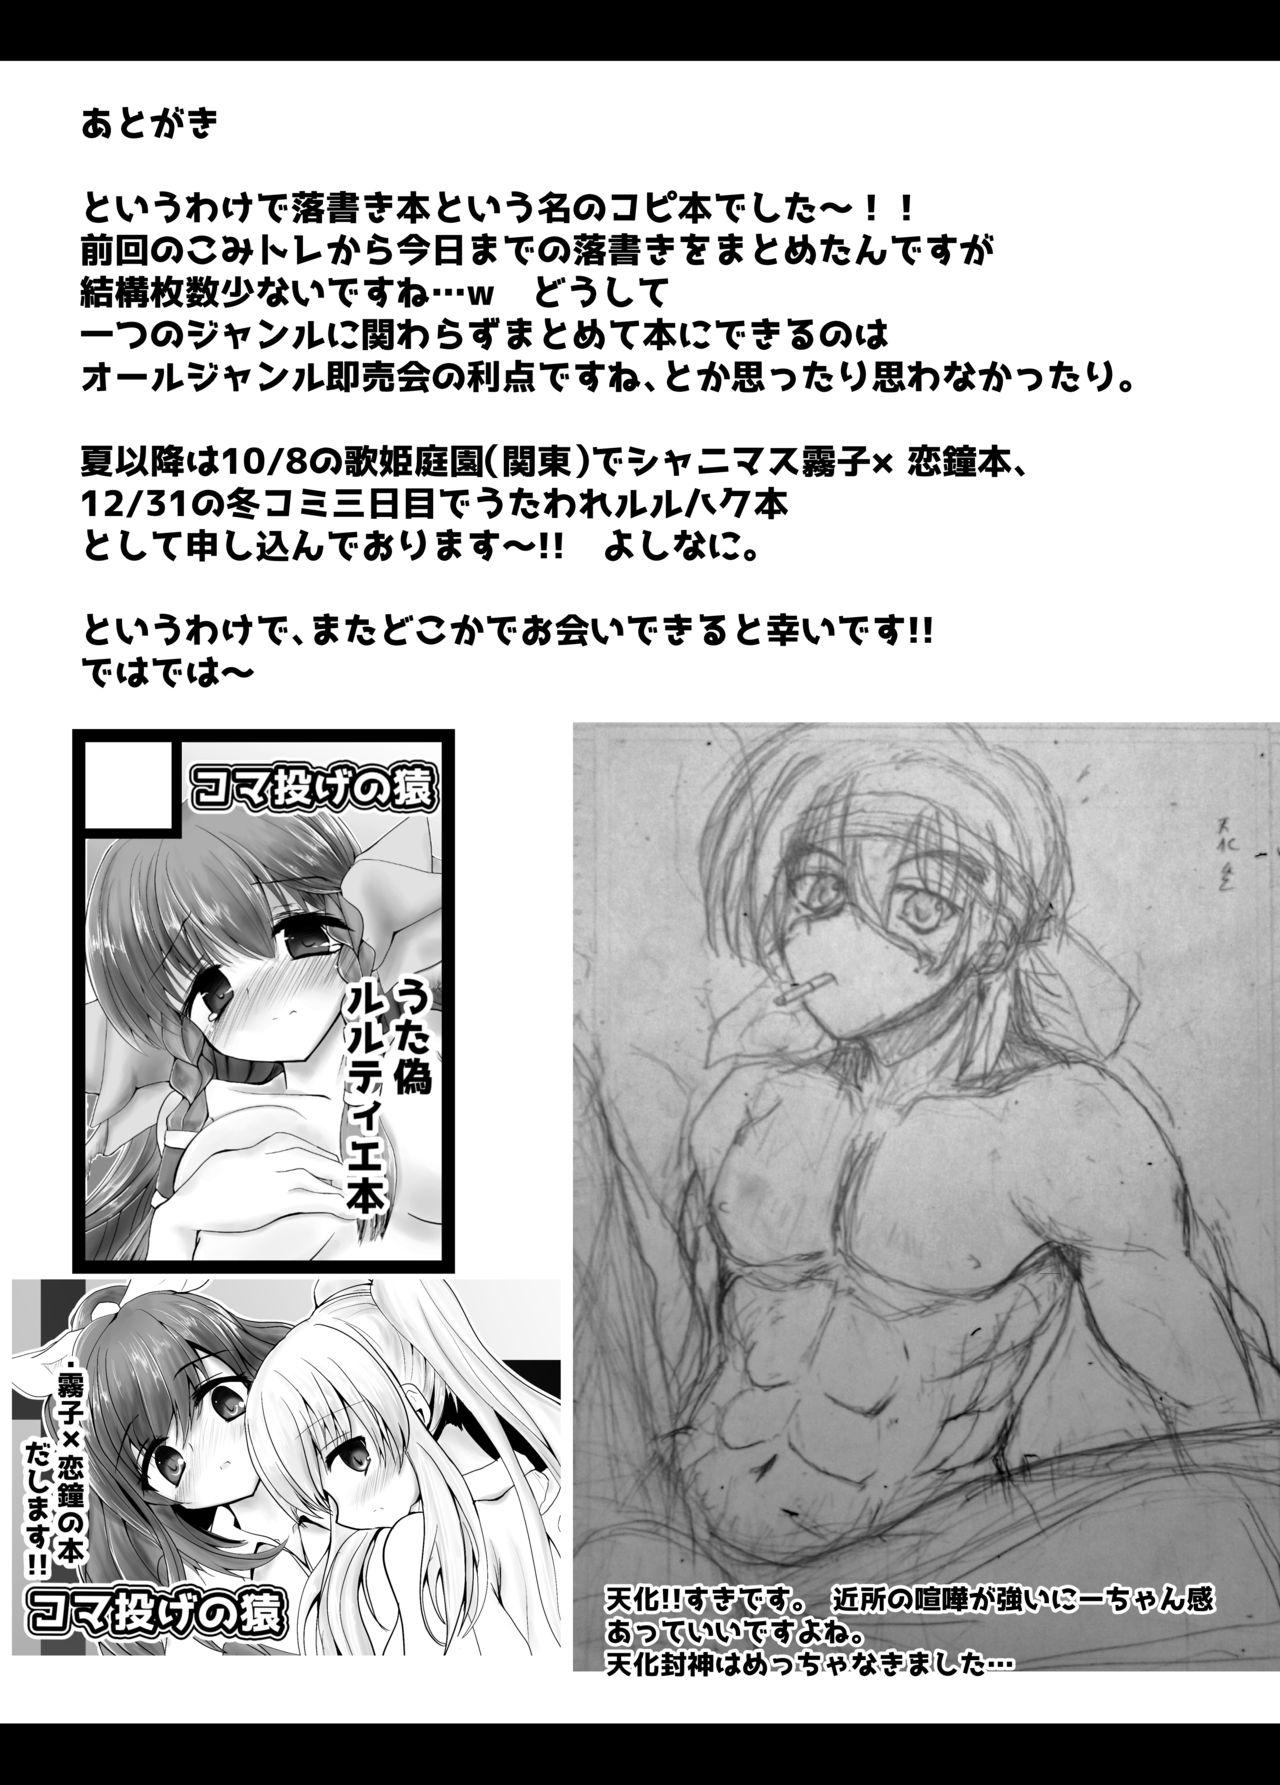 Beurette こみトレ32で出したコピ本 - Utawarerumono itsuwari no kamen Huge Tits - Page 11